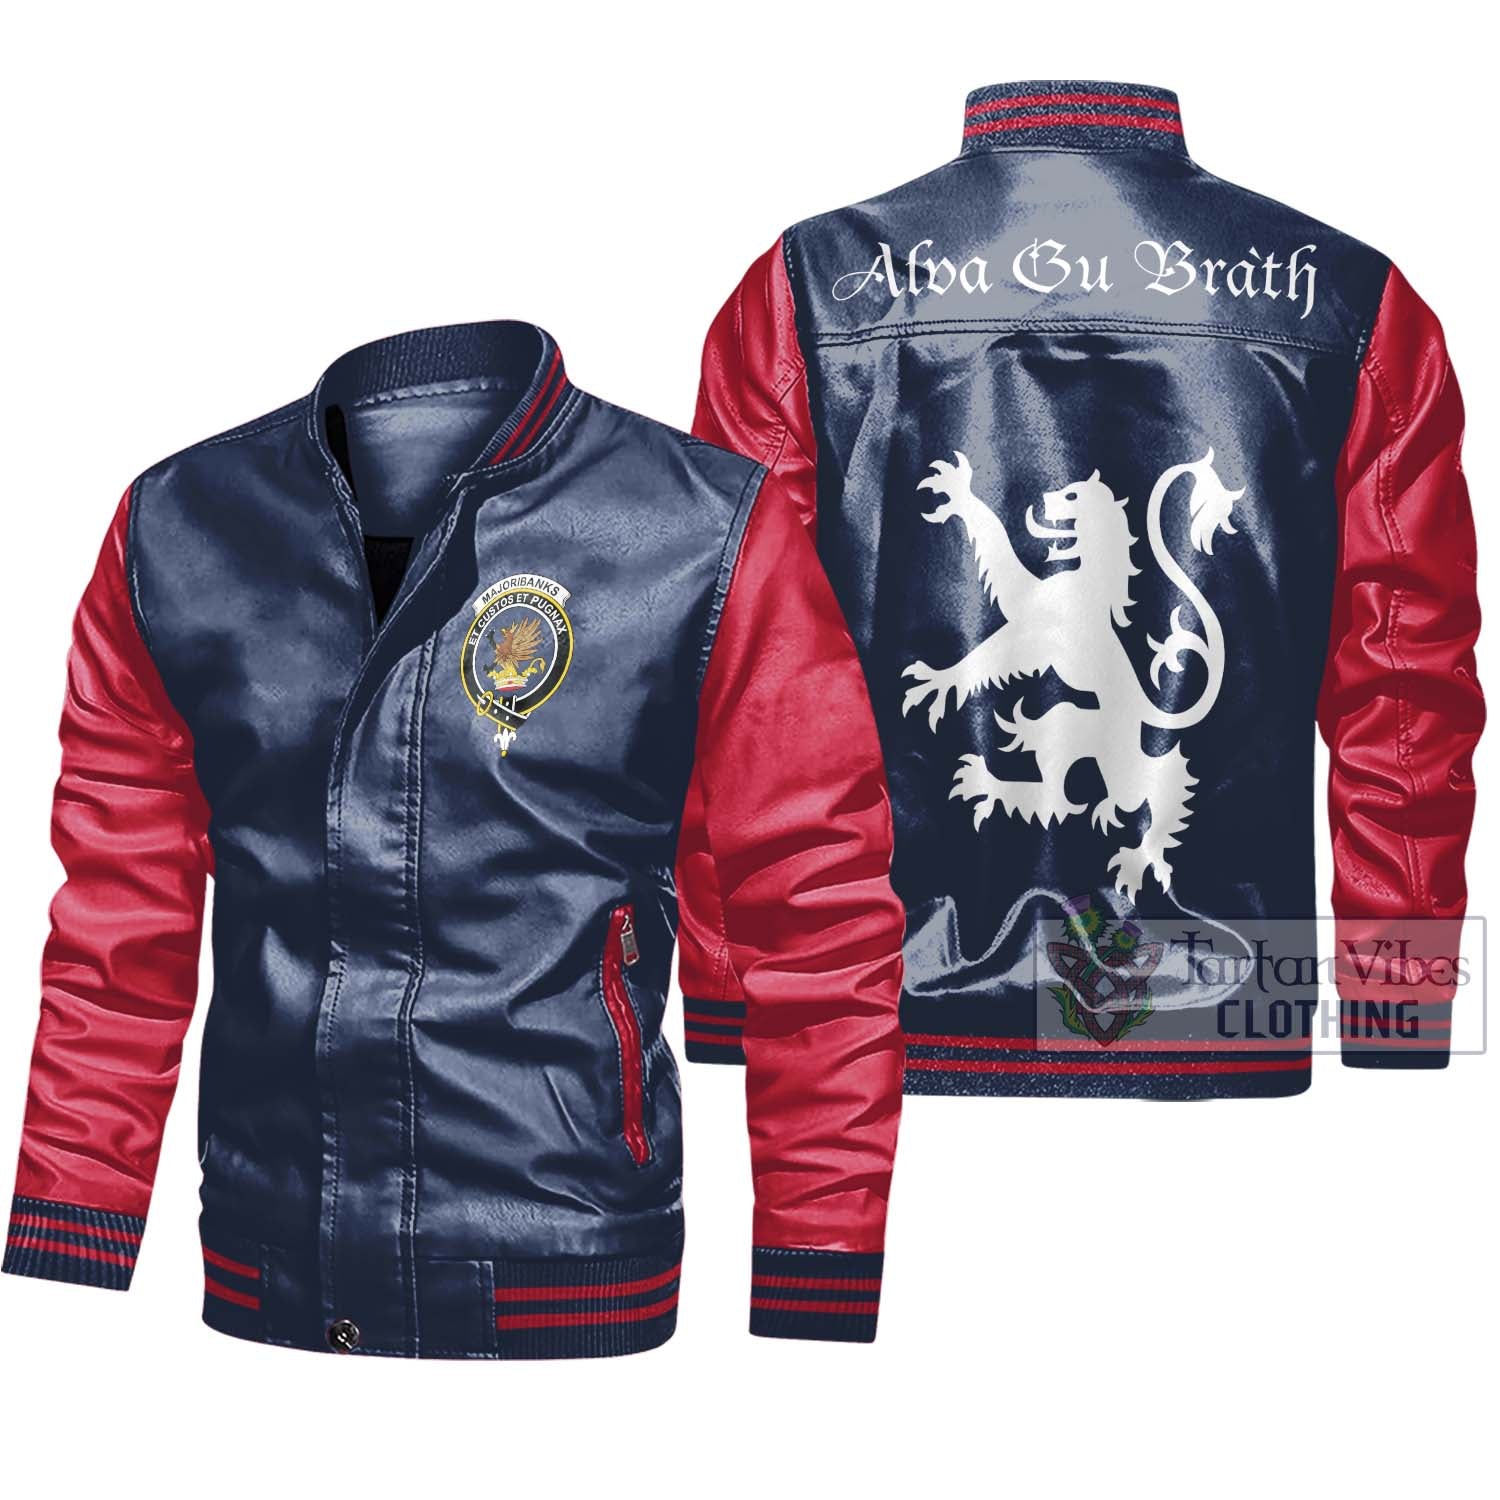 Tartan Vibes Clothing Majoribanks Family Crest Leather Bomber Jacket Lion Rampant Alba Gu Brath Style